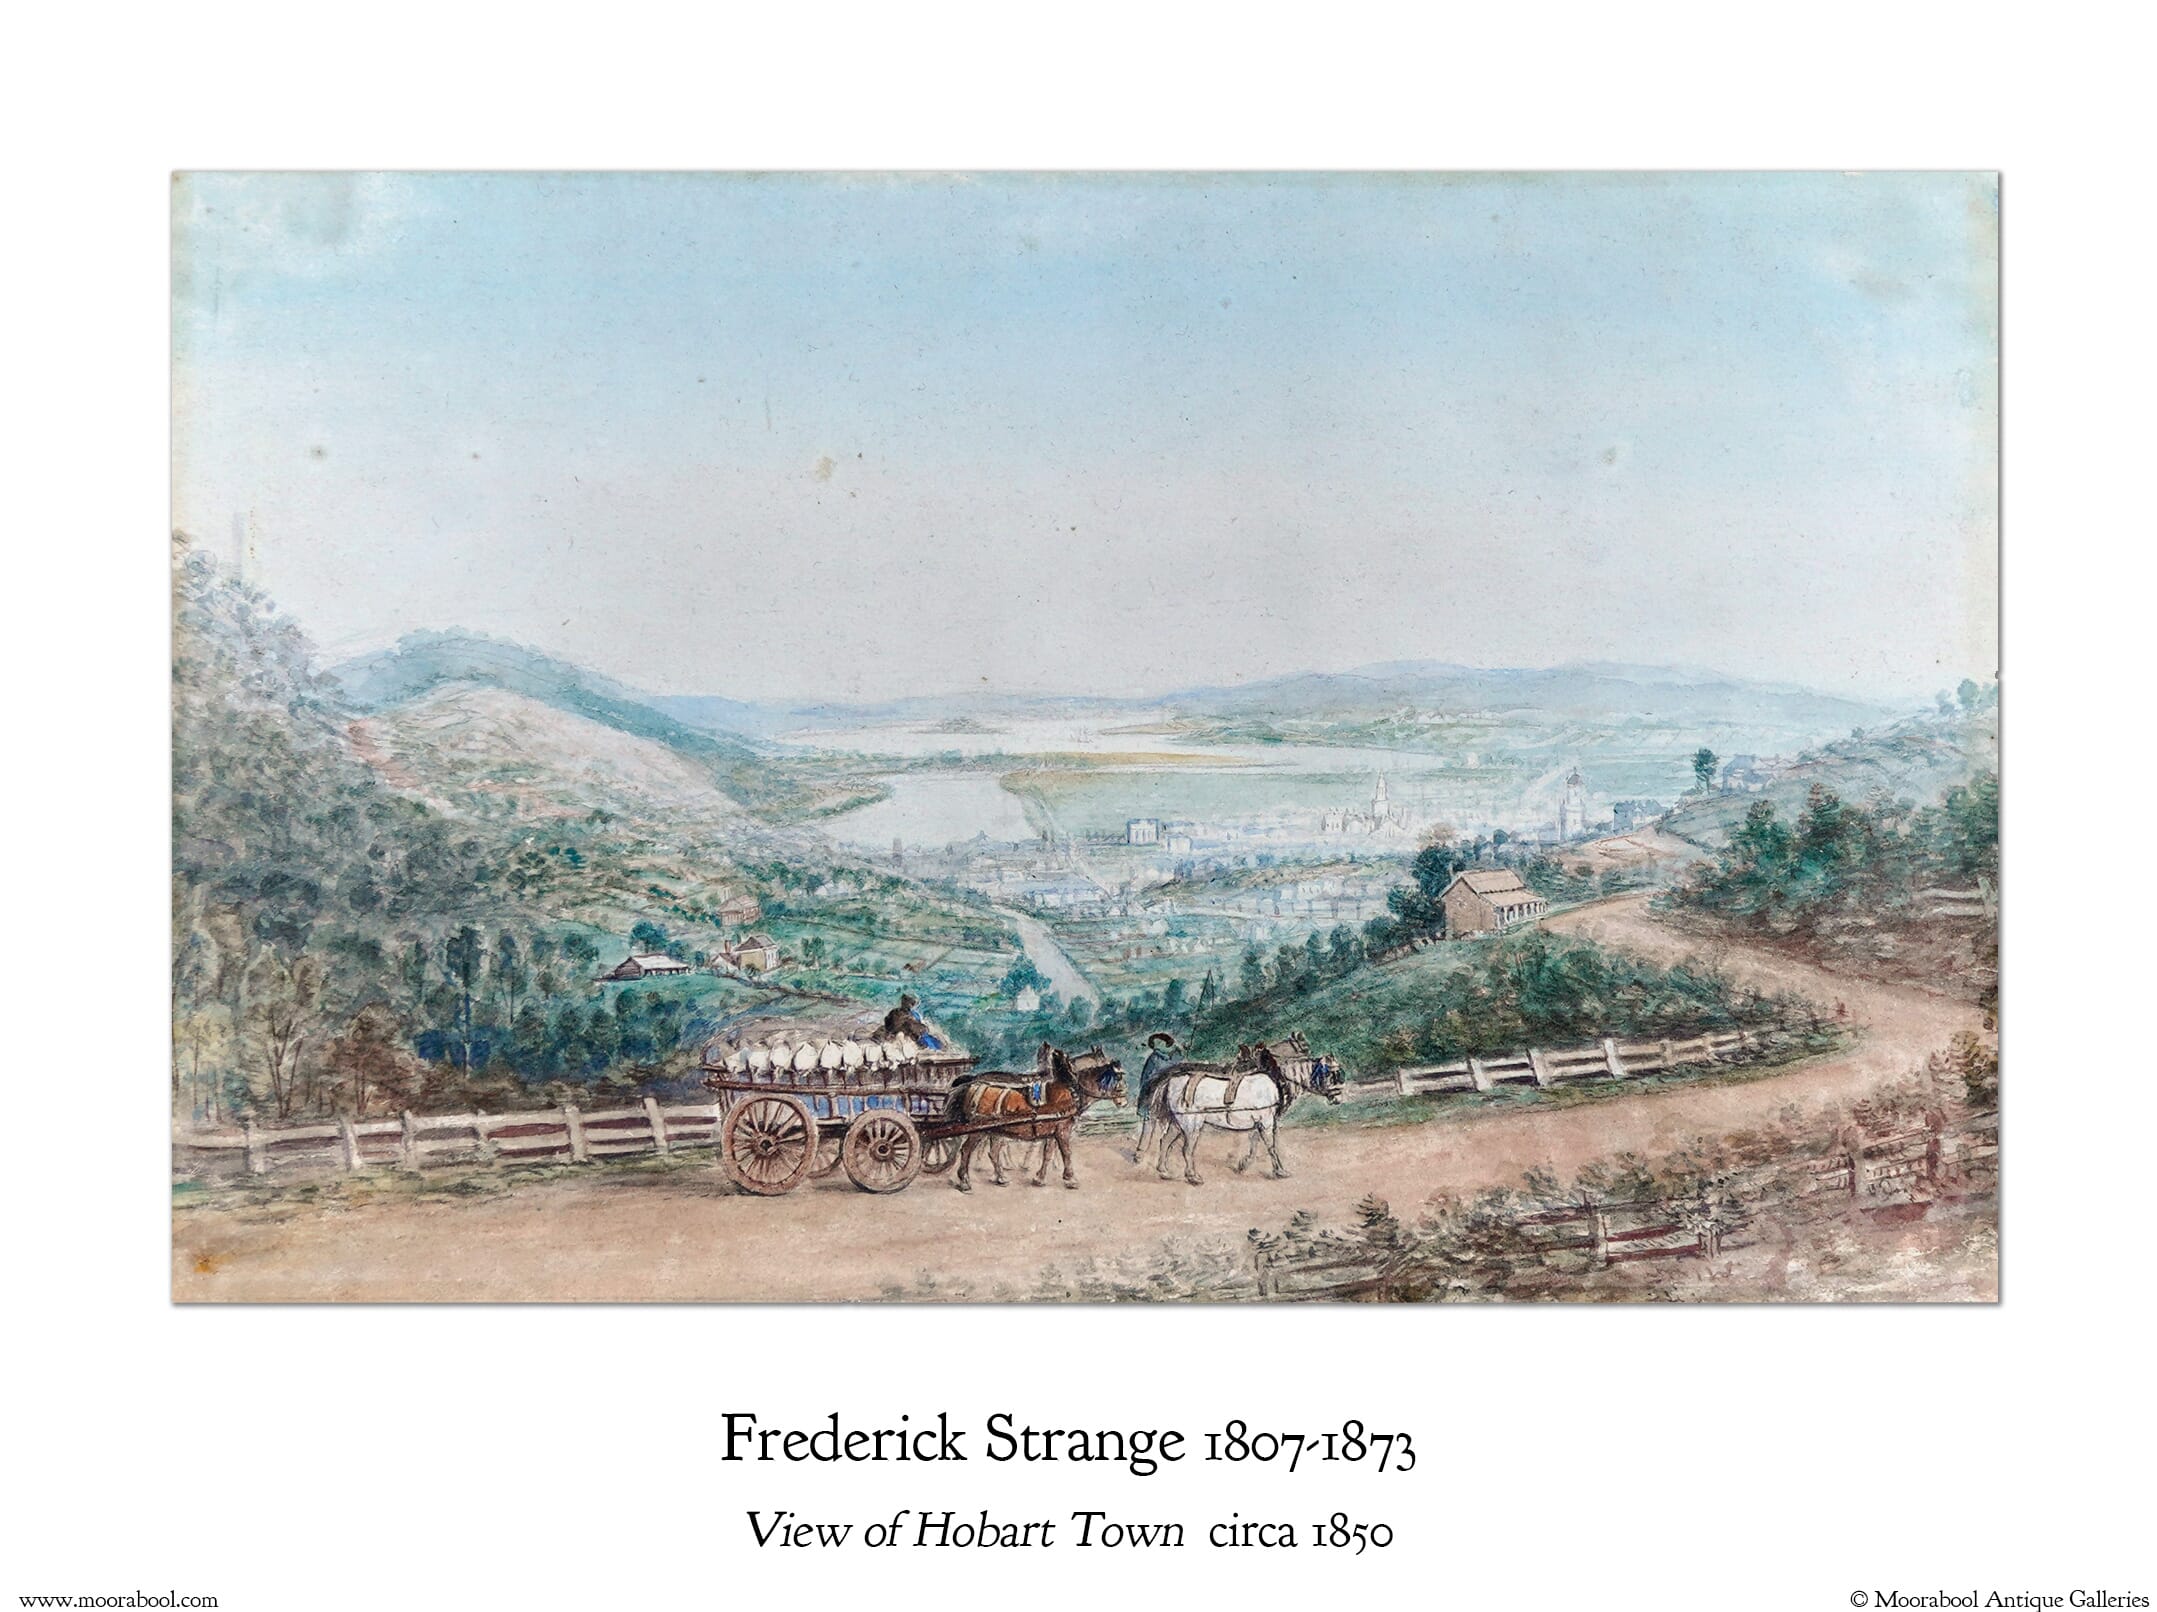 Frederick Strange - View of Hobart Town circa 1850